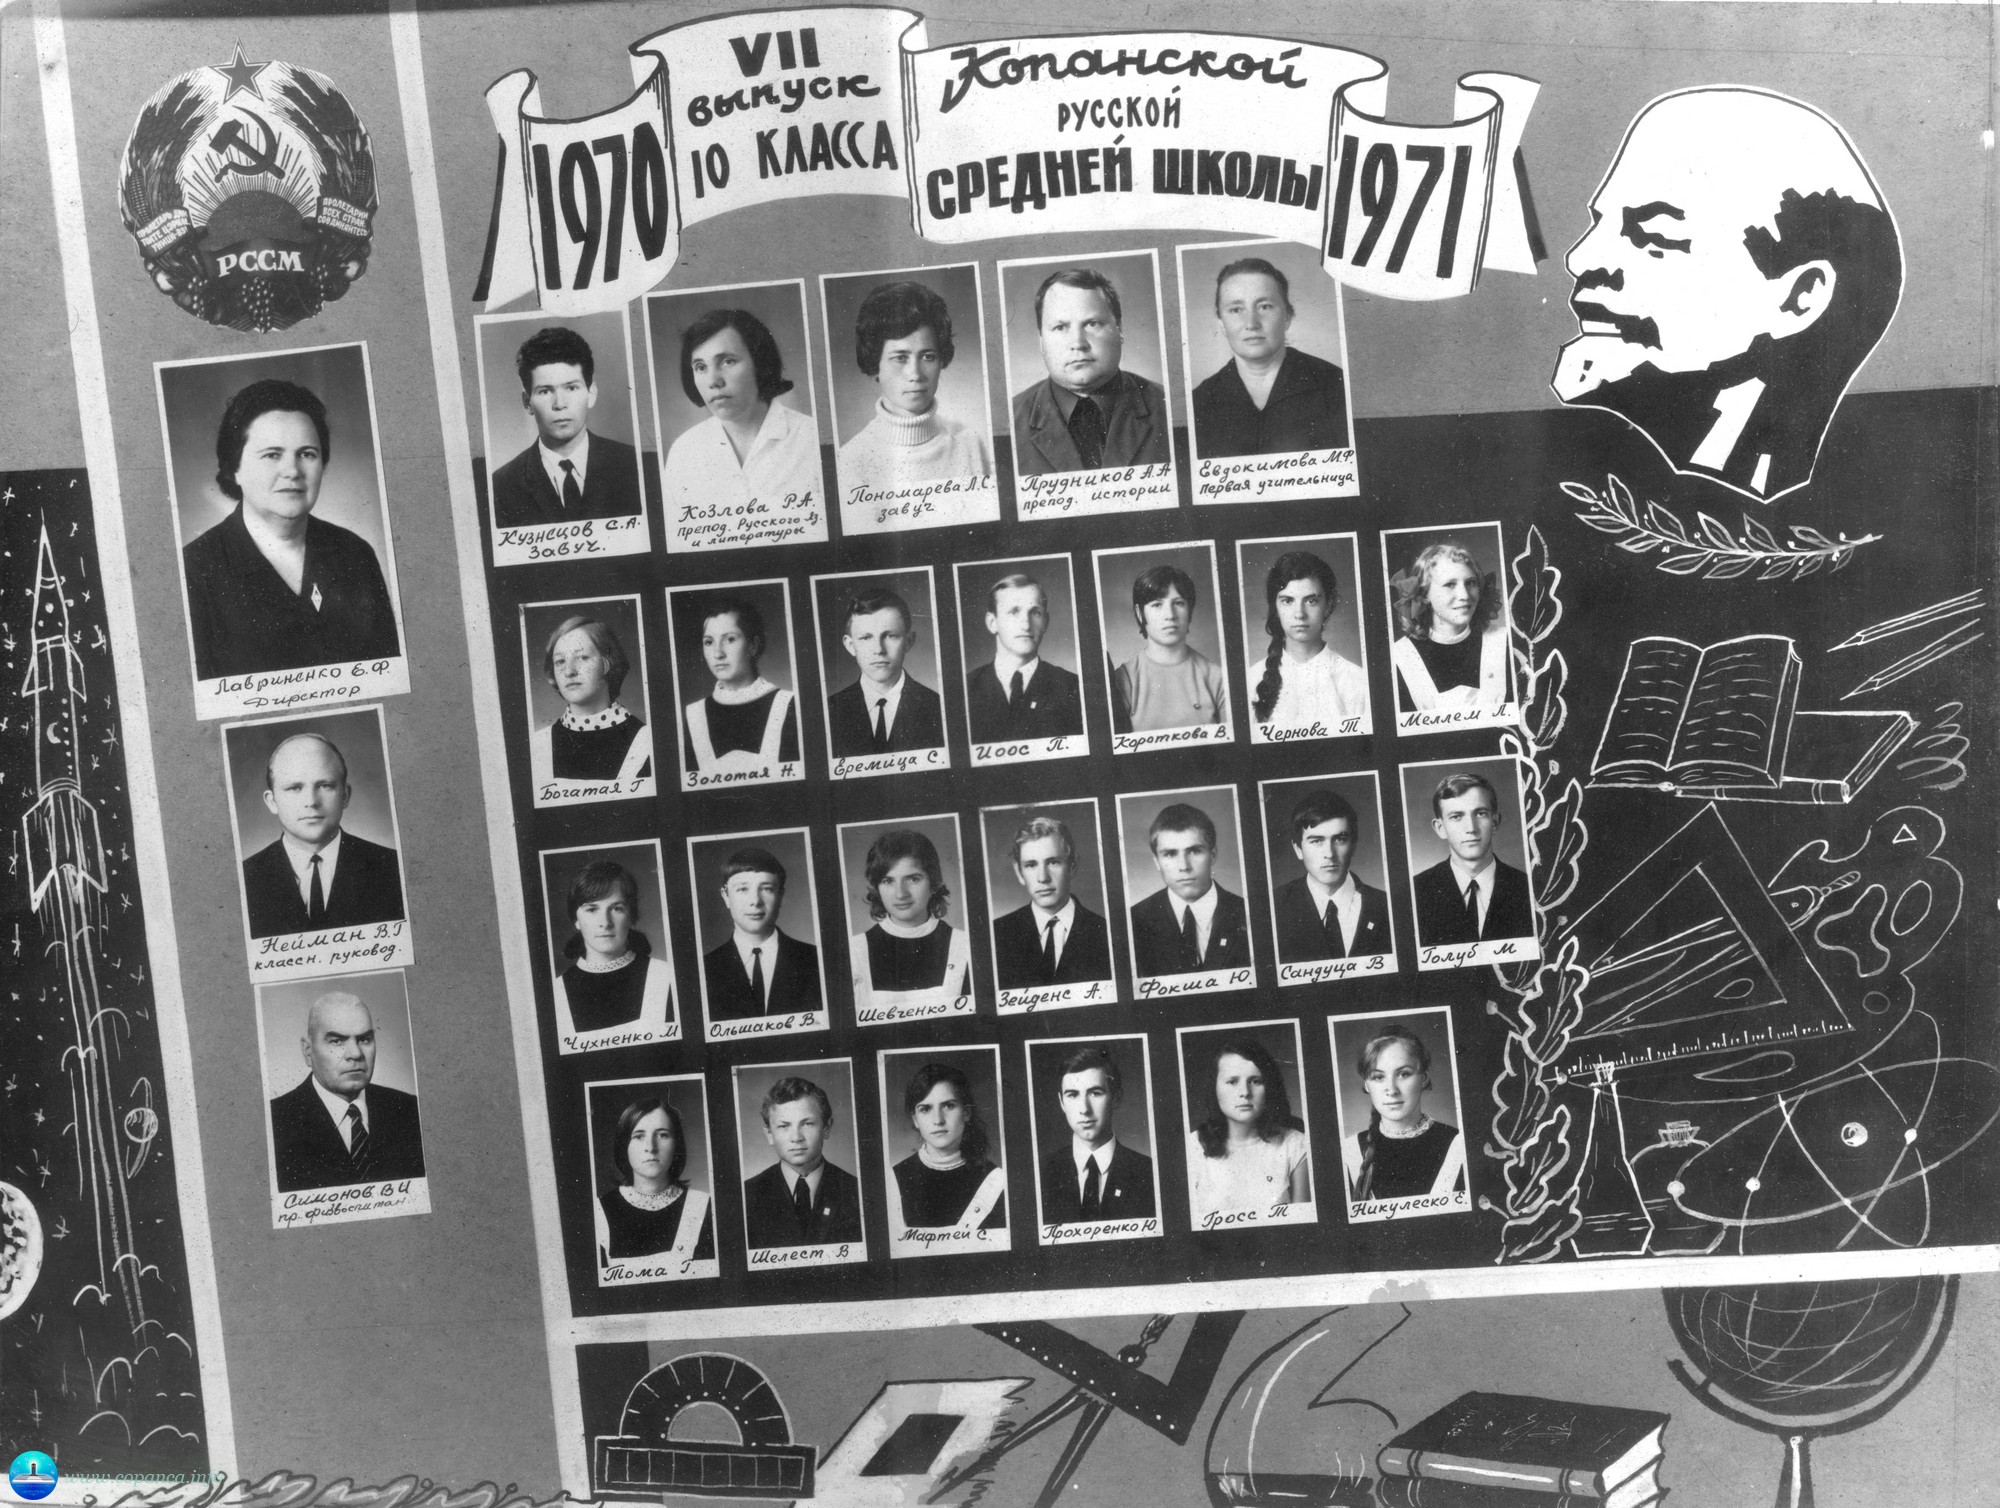 XII выпуск 10 класса Копанской РСШ 1970-1971 у. г.